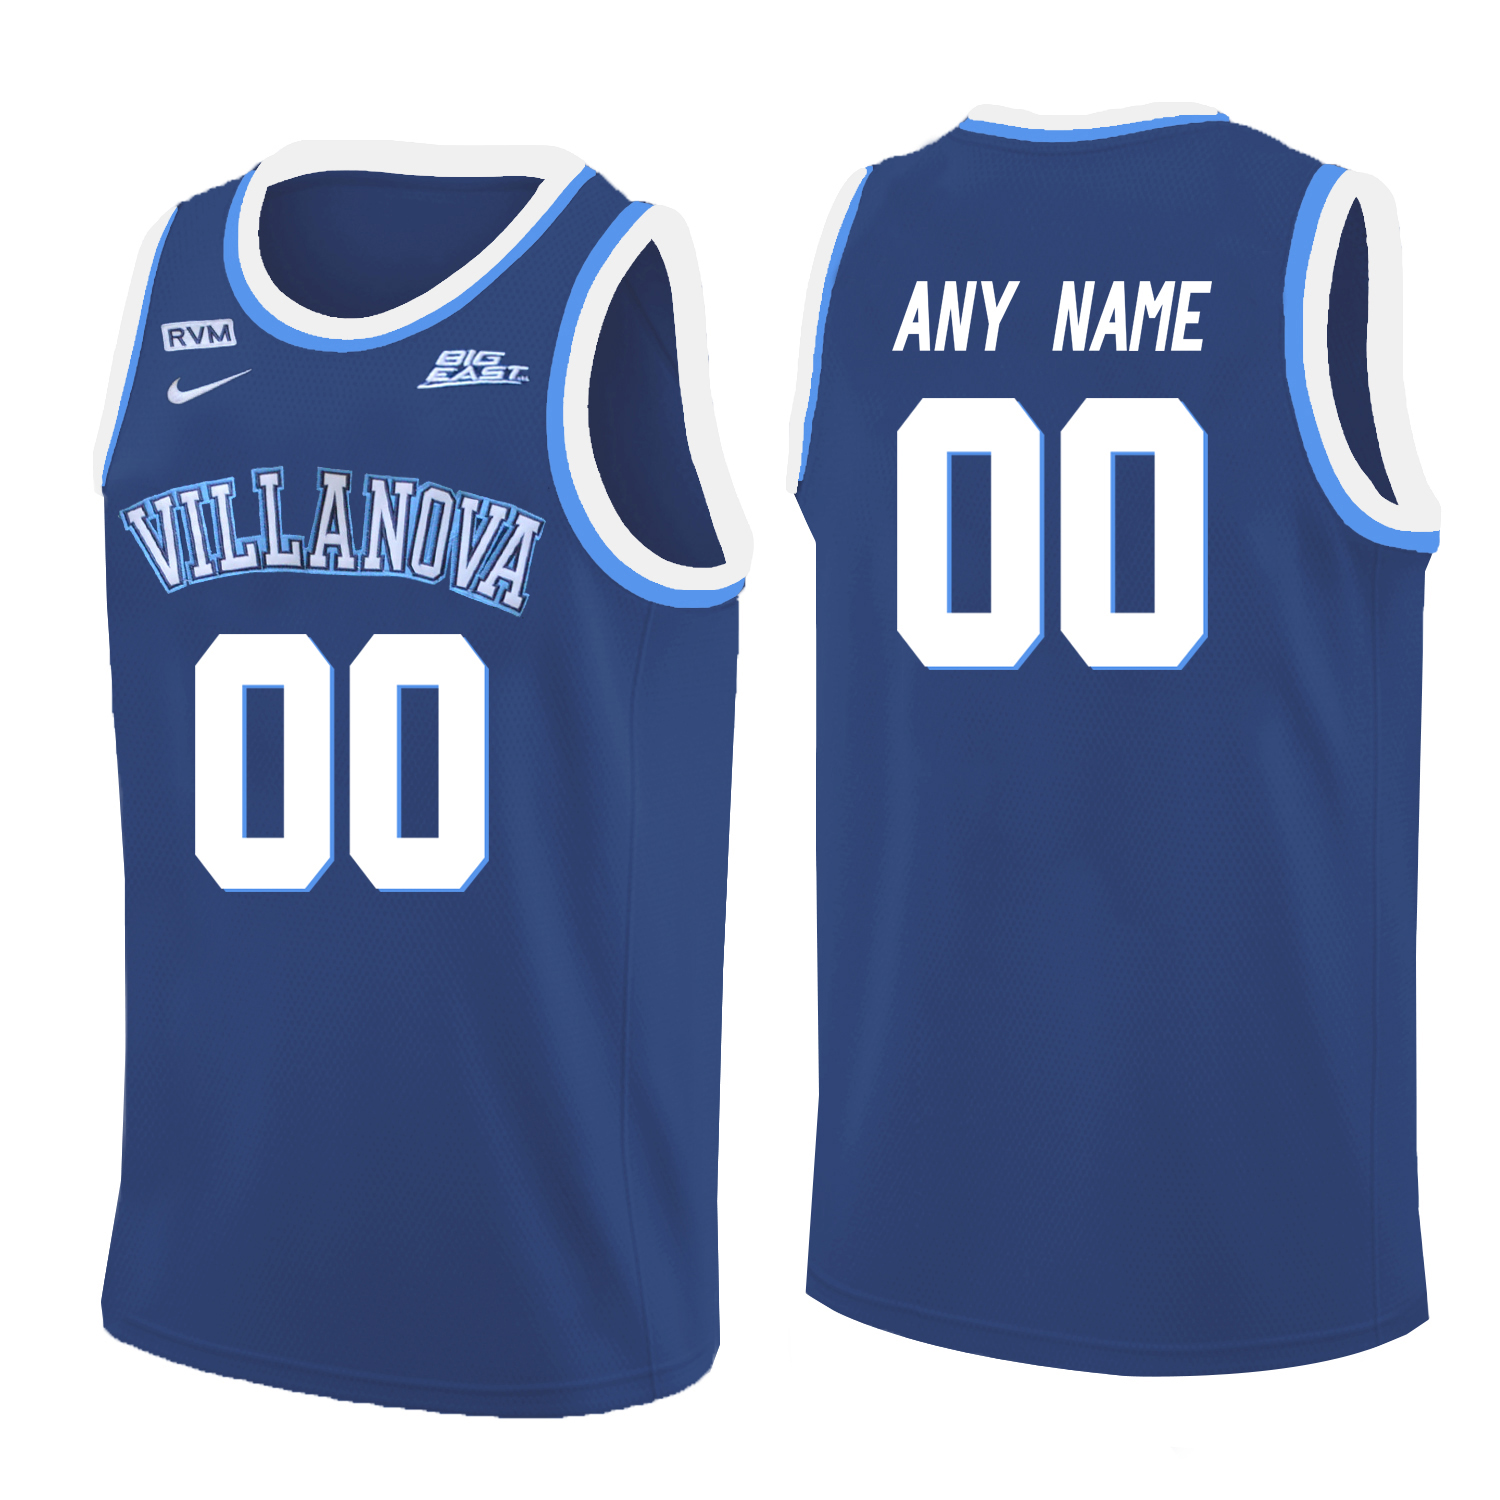 Men's Villanova Wildcats Custom Nike 2018 Royal Basketball Jersey